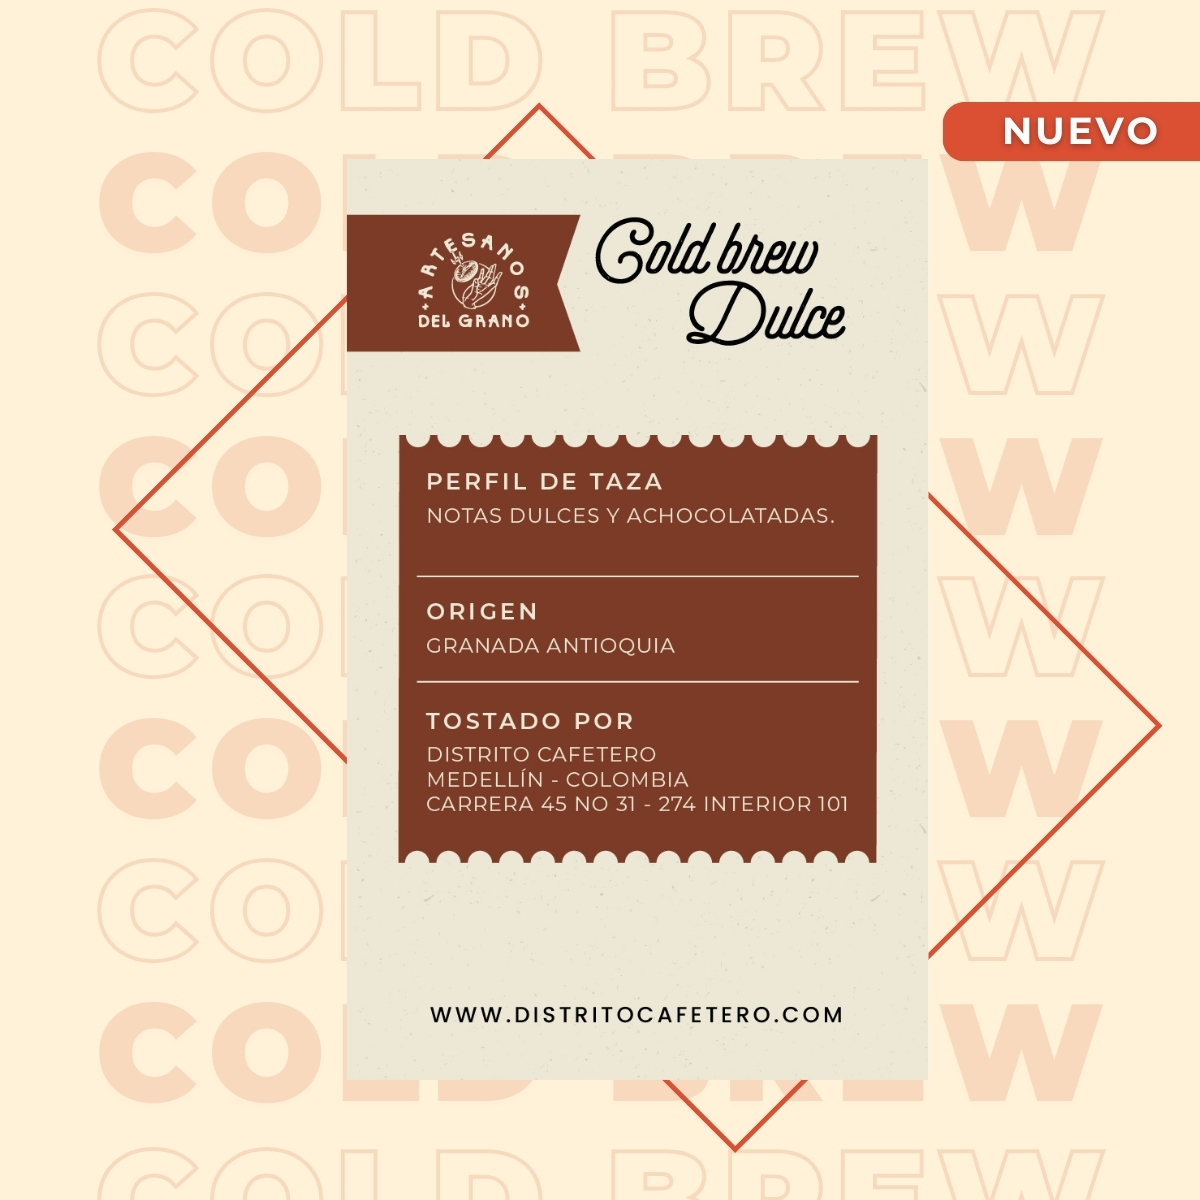 cafe frio Cold brew dulce tarjeta - Café Especial - Cold Brew Dulce